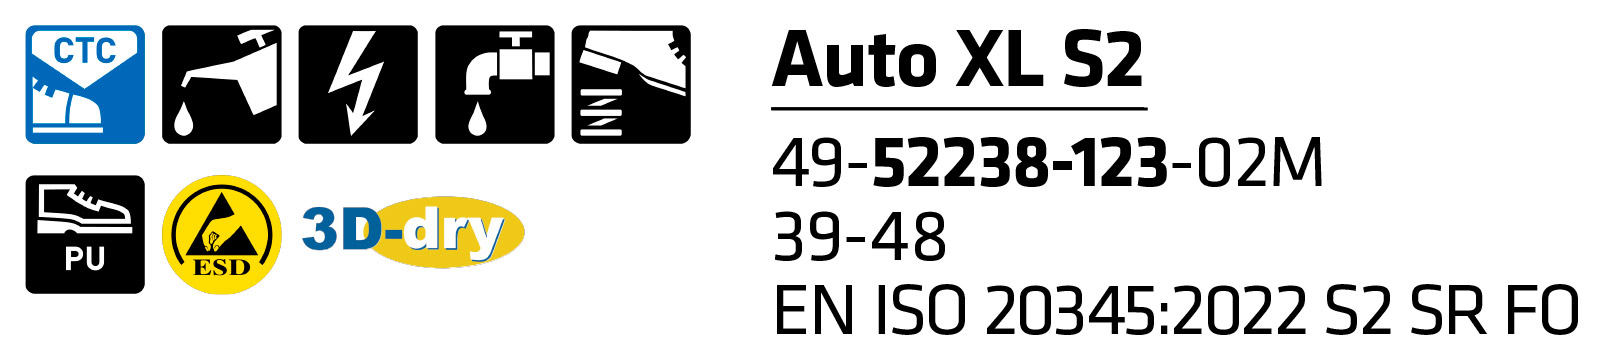 Auto_XL-S2